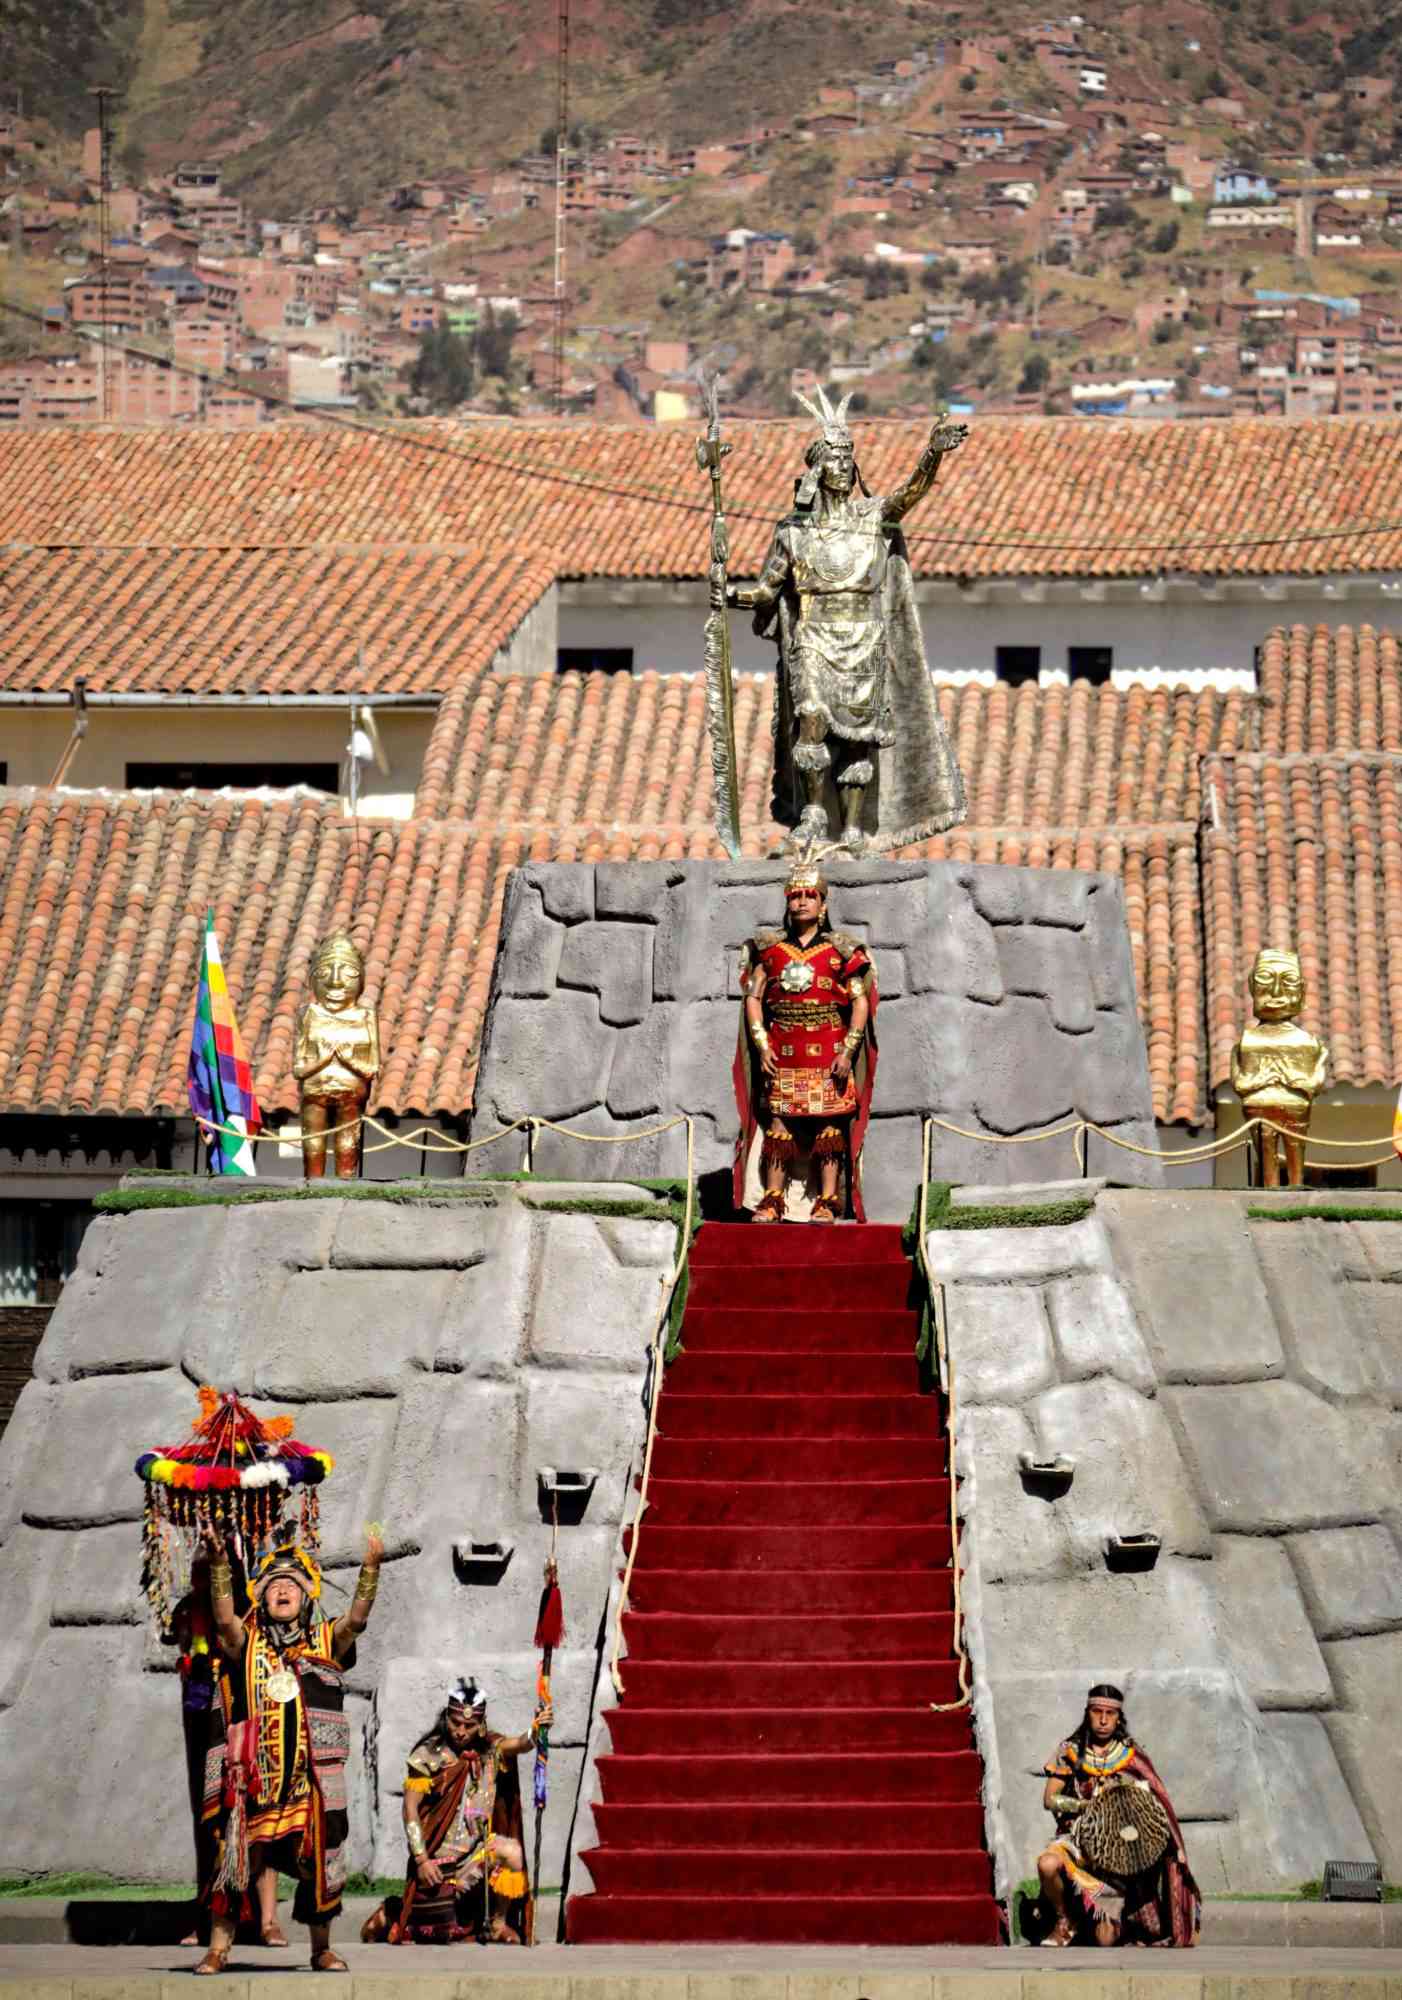 Inca Festival